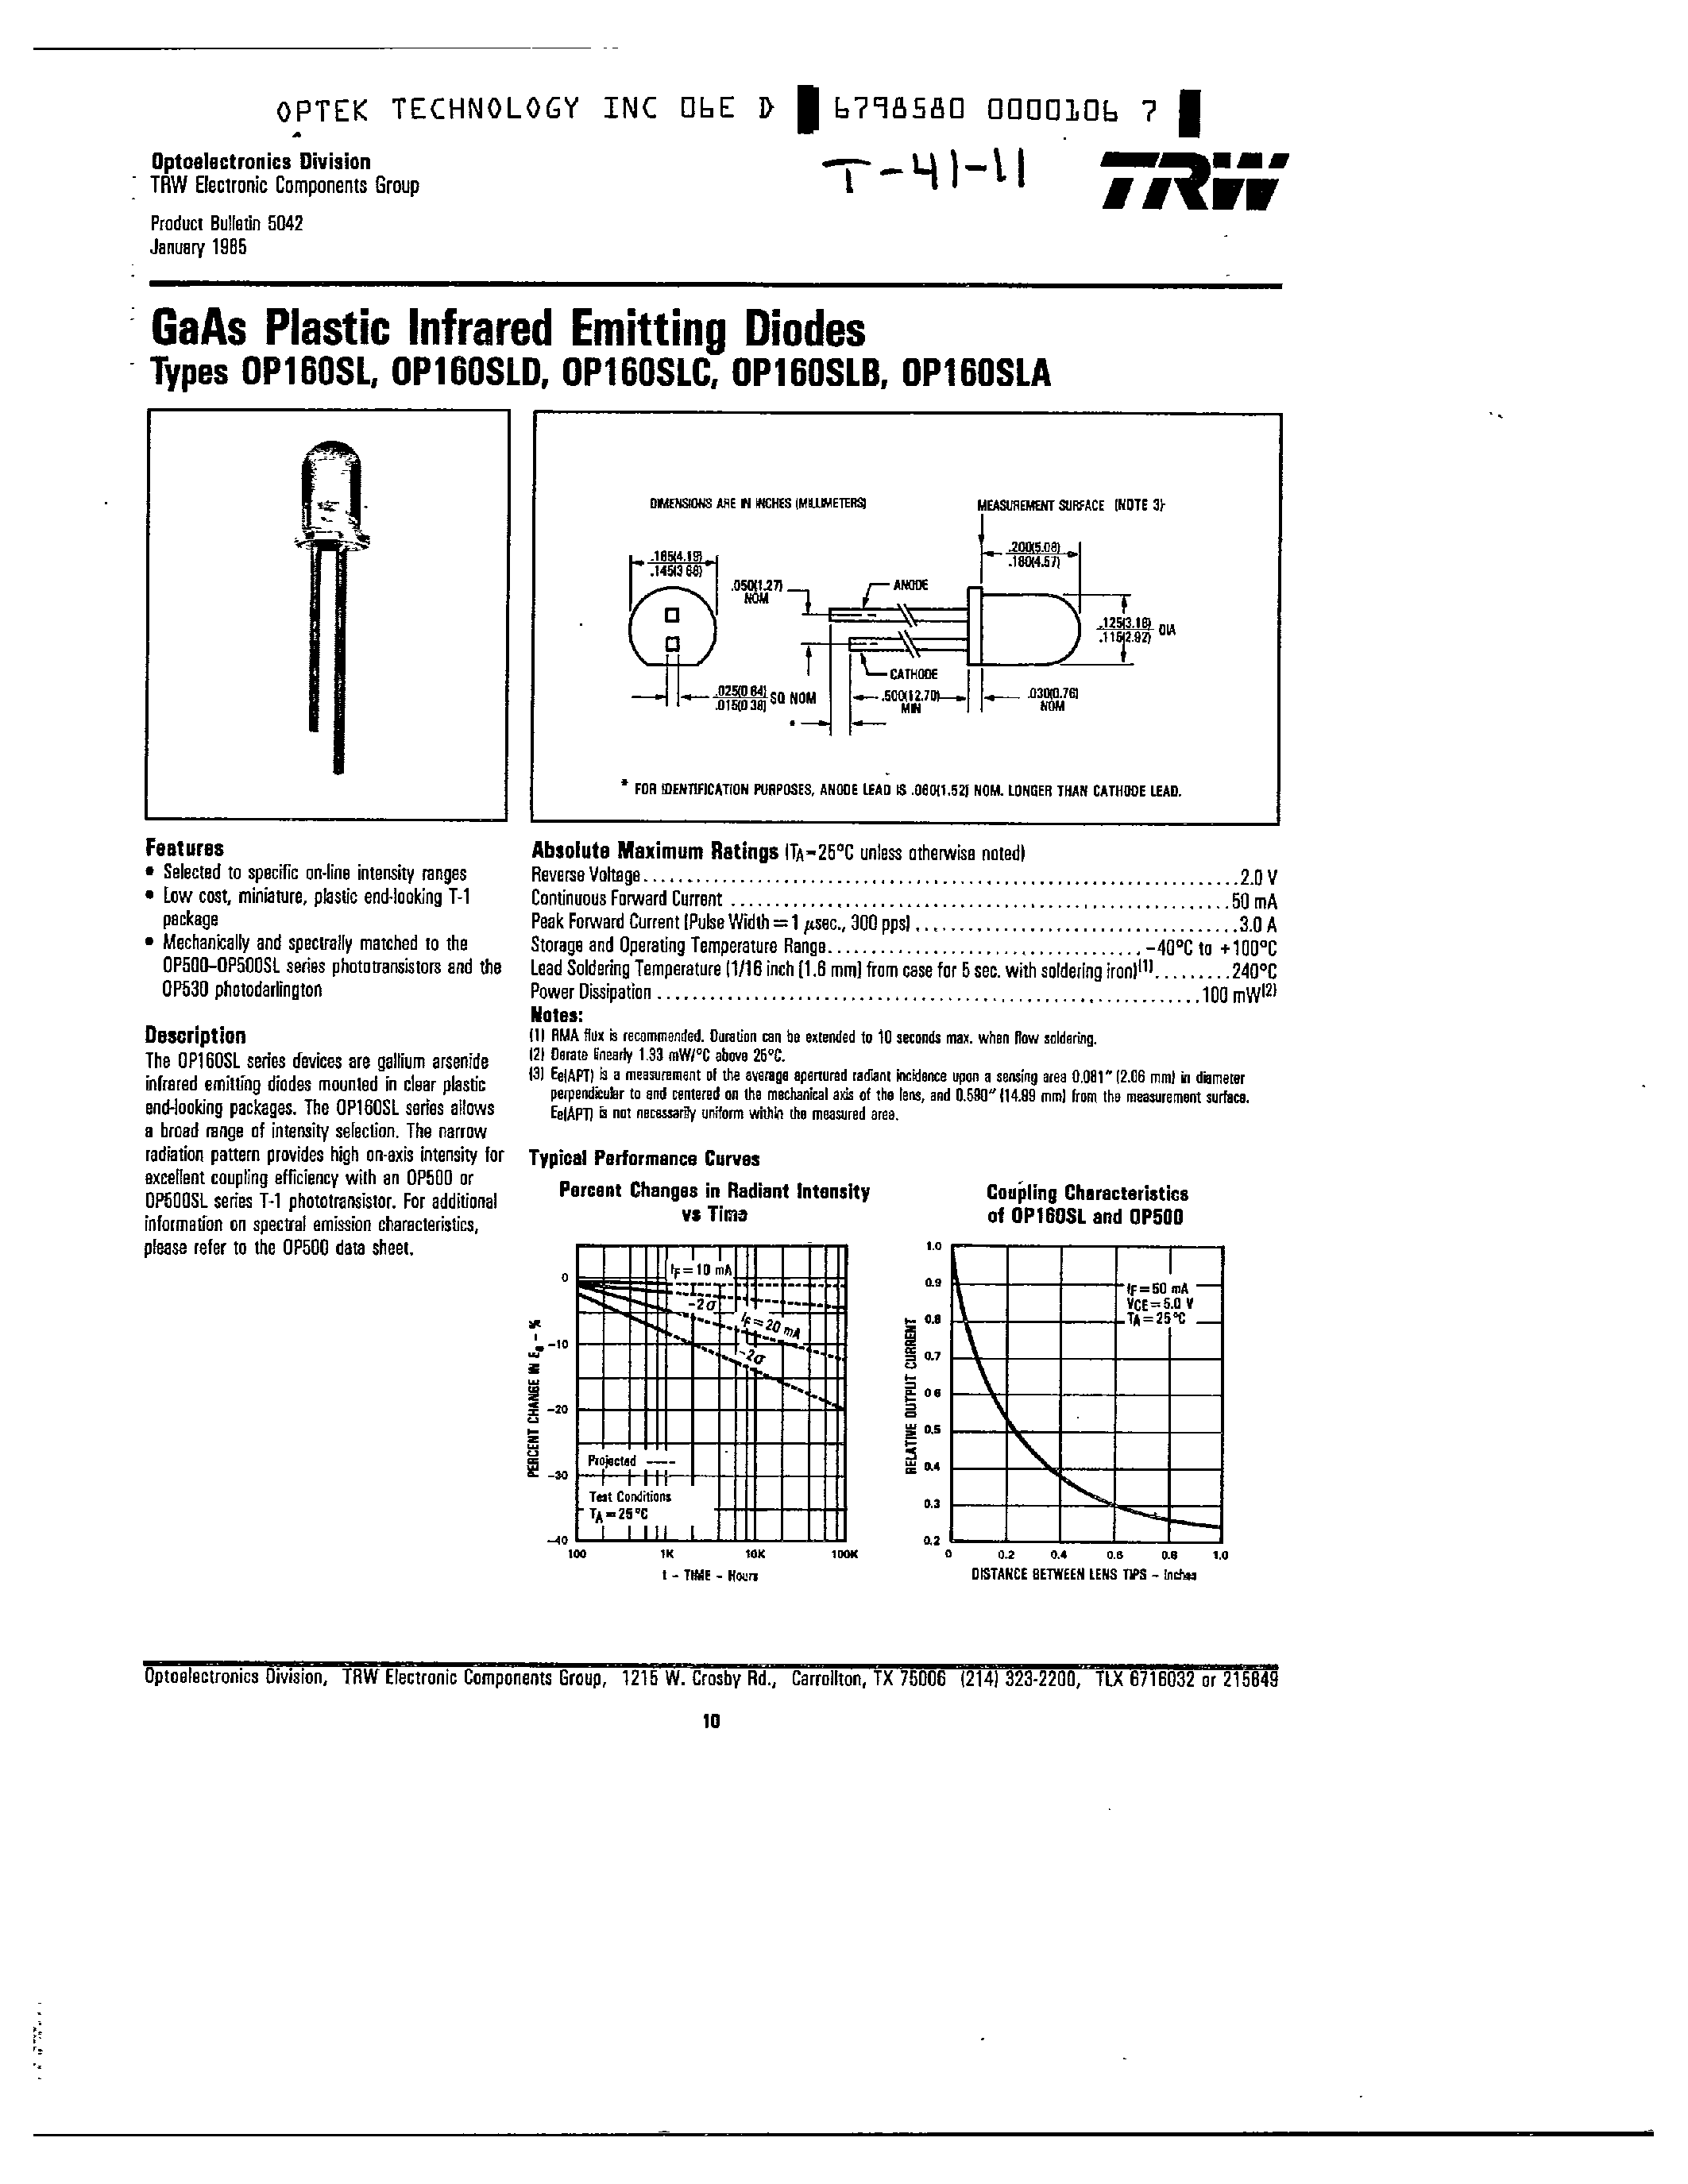 Datasheet OP160SLA - GAAS PLASTIC INFRARED EMITTING DIODES page 1